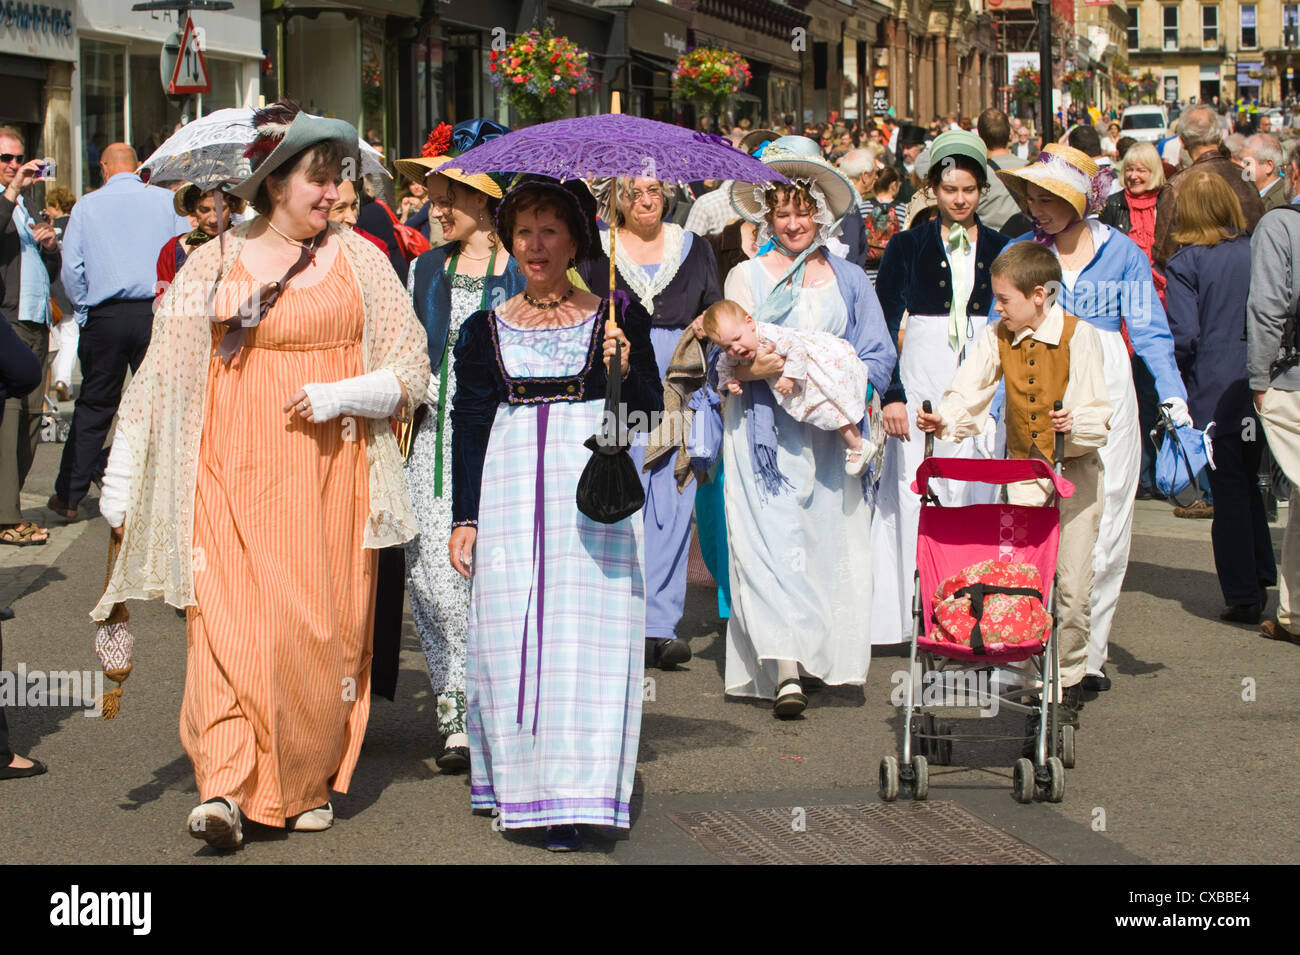 Fans in Regency costume promenade through Bath city centre during the 2012 Jane Austen Festival Stock Photo